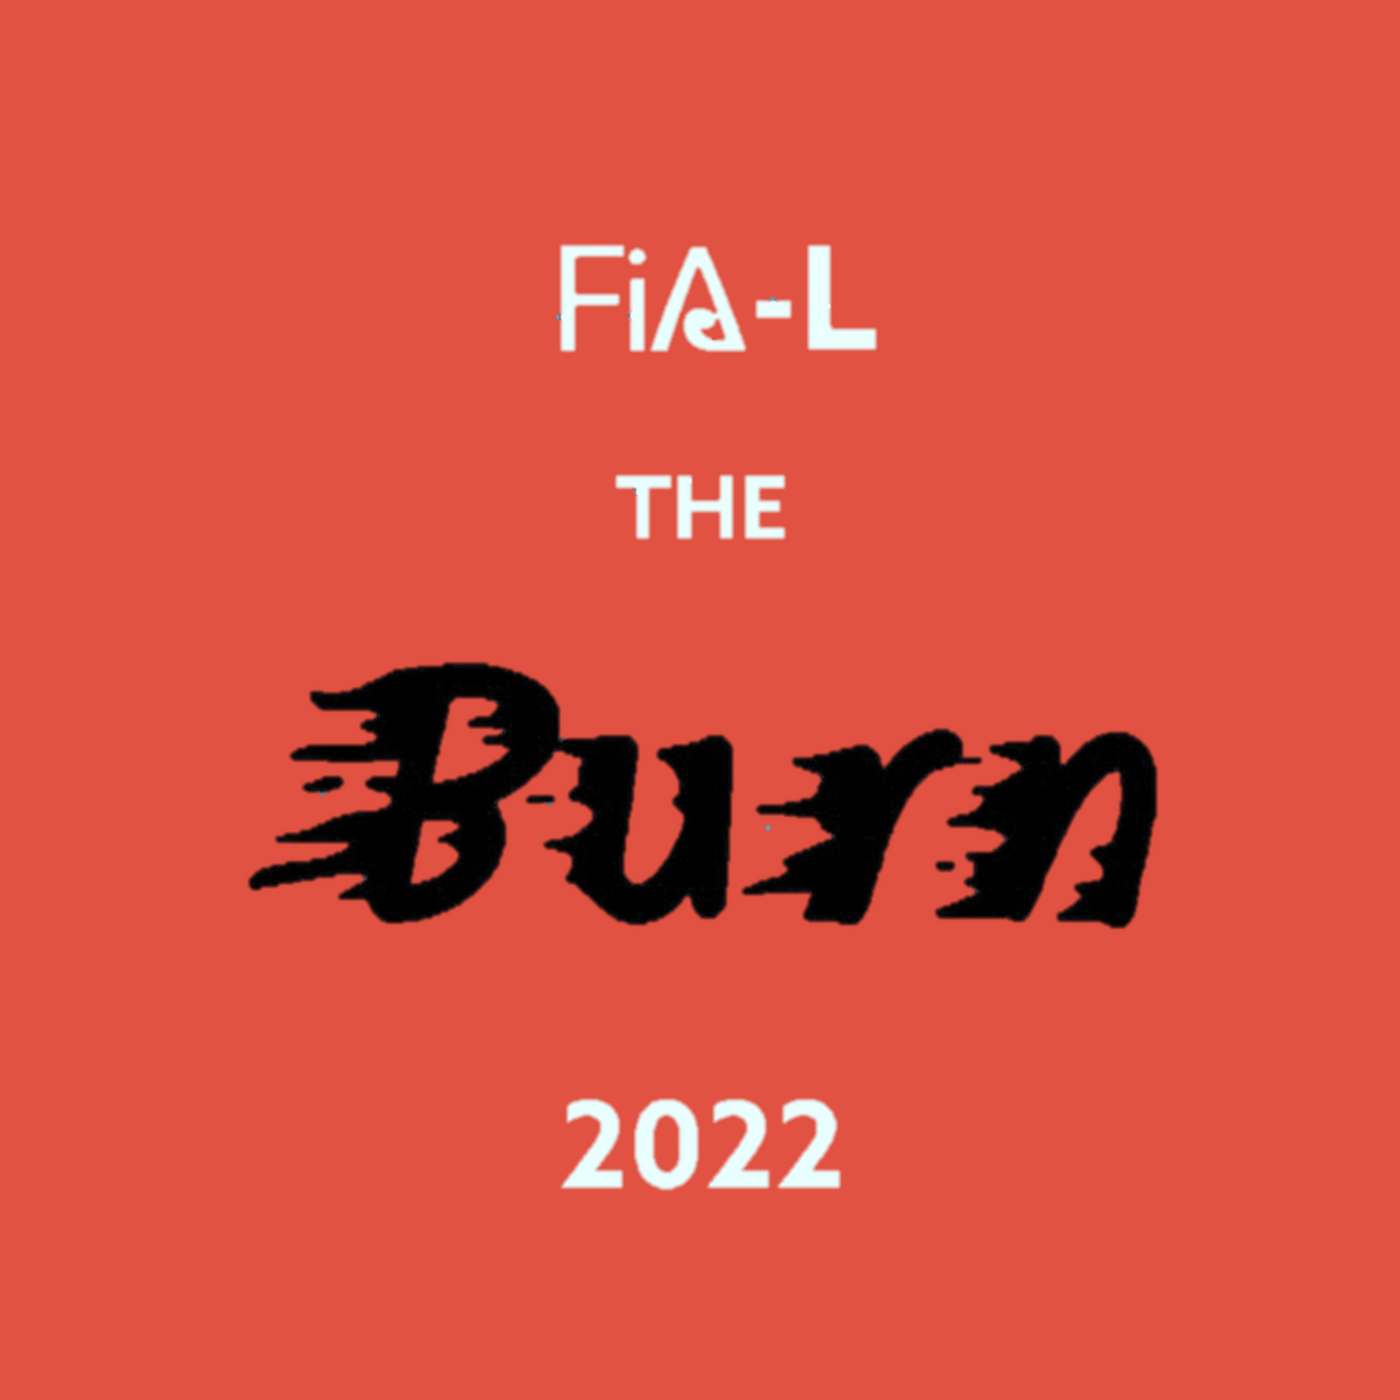 FiA Phoenix FiA-L Burn Pre-Order September 2022